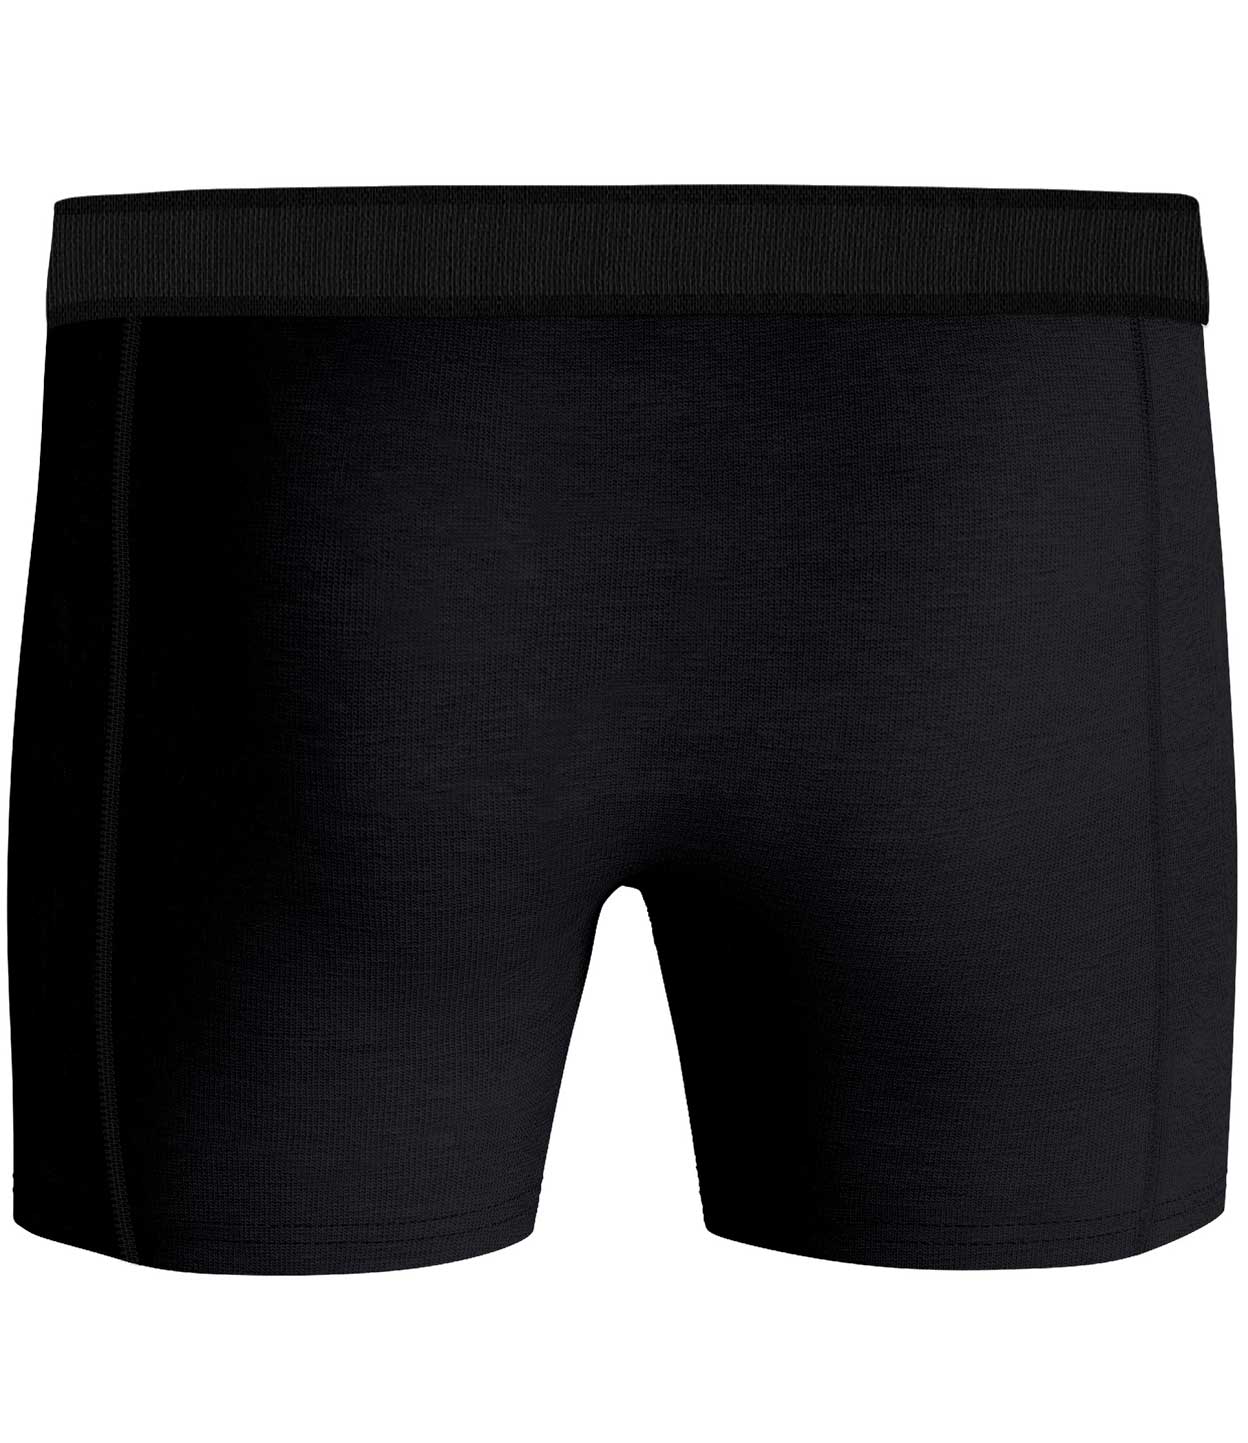 Premium Cotton Shorts - 2 pack